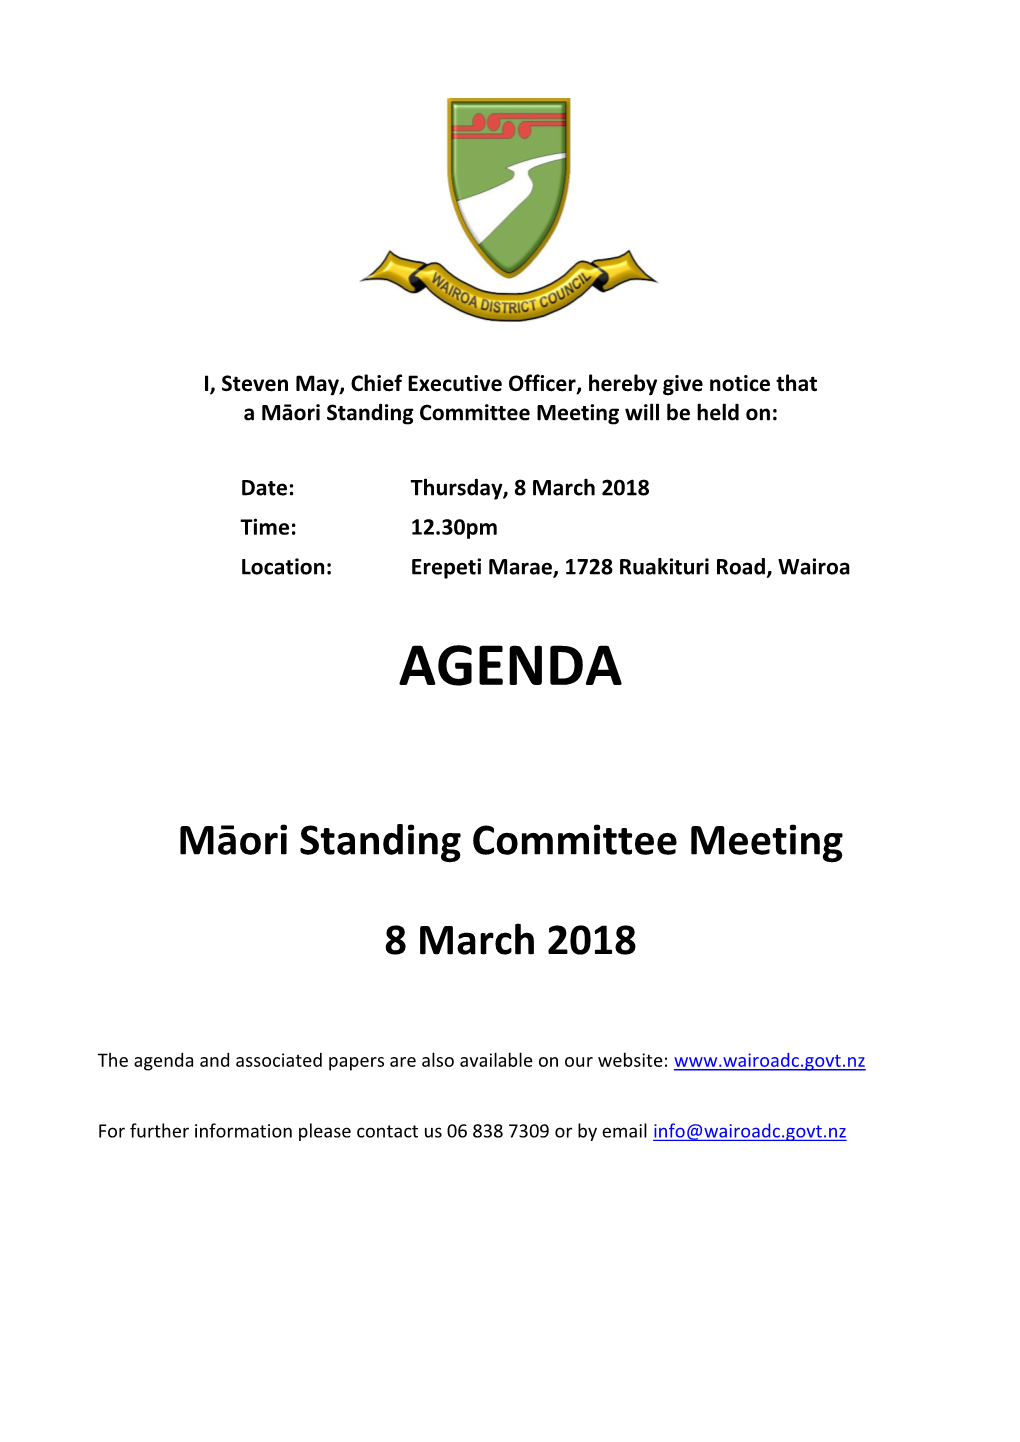 Agenda of Māori Standing Committee Meeting